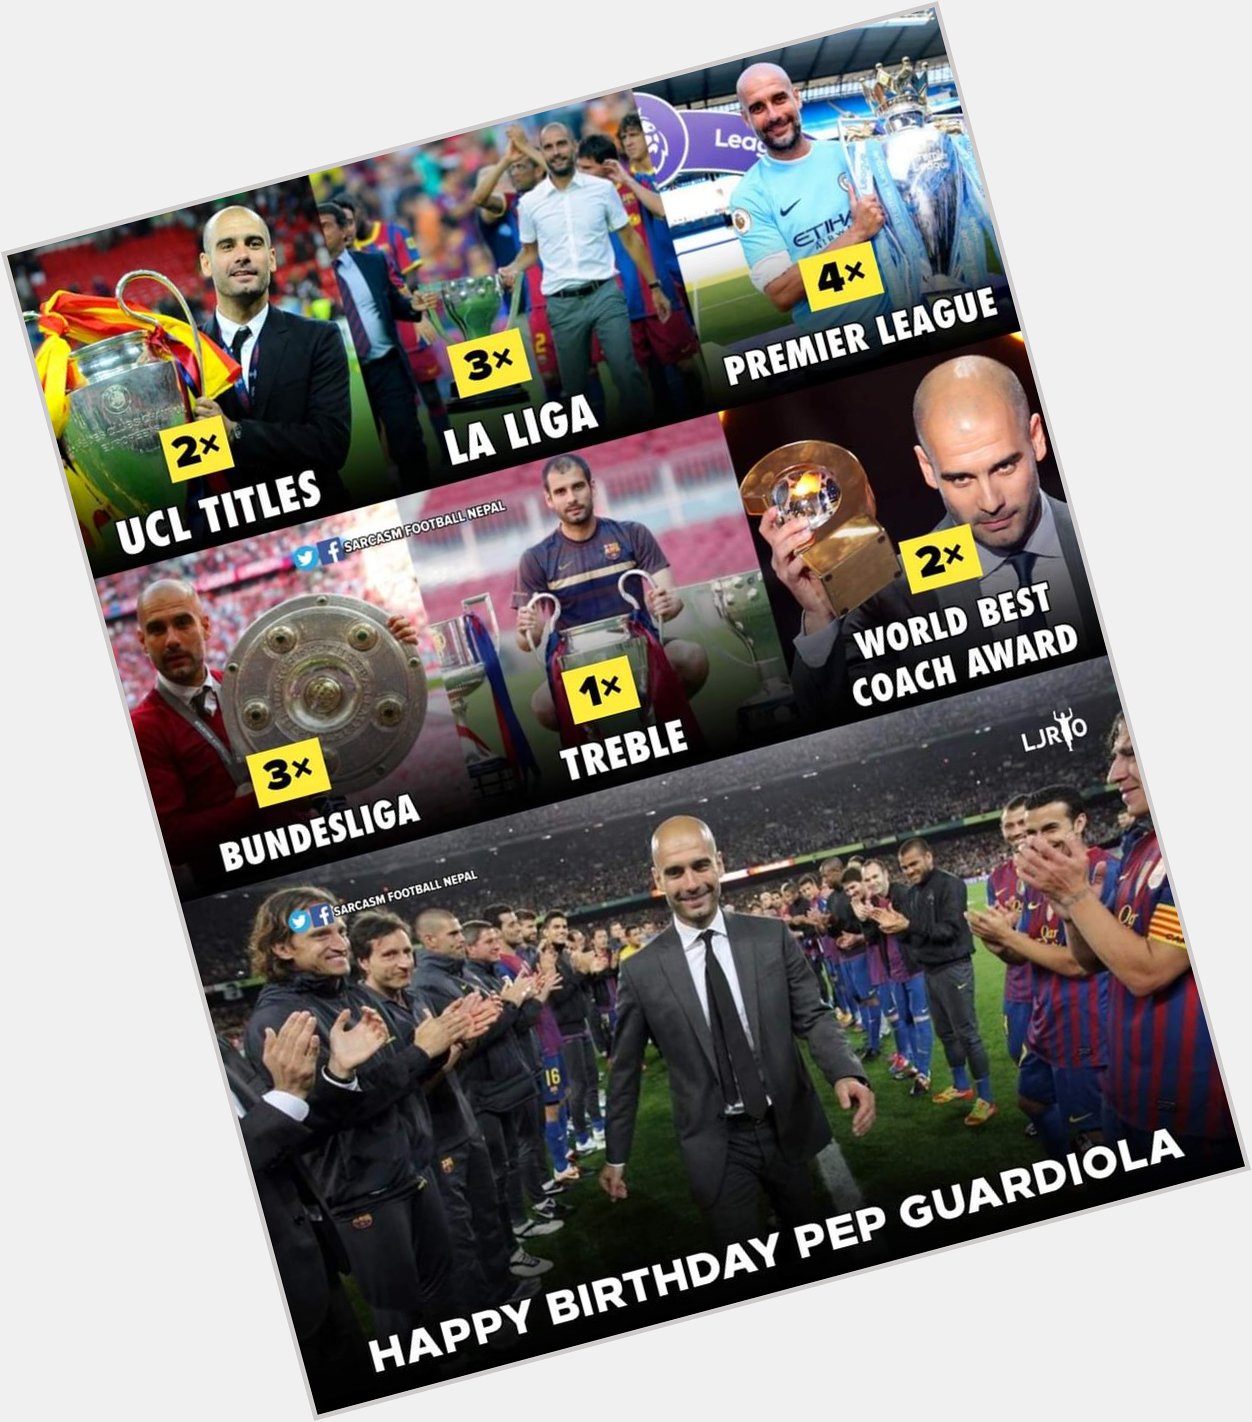 Happy birthday Pep Guardiola   